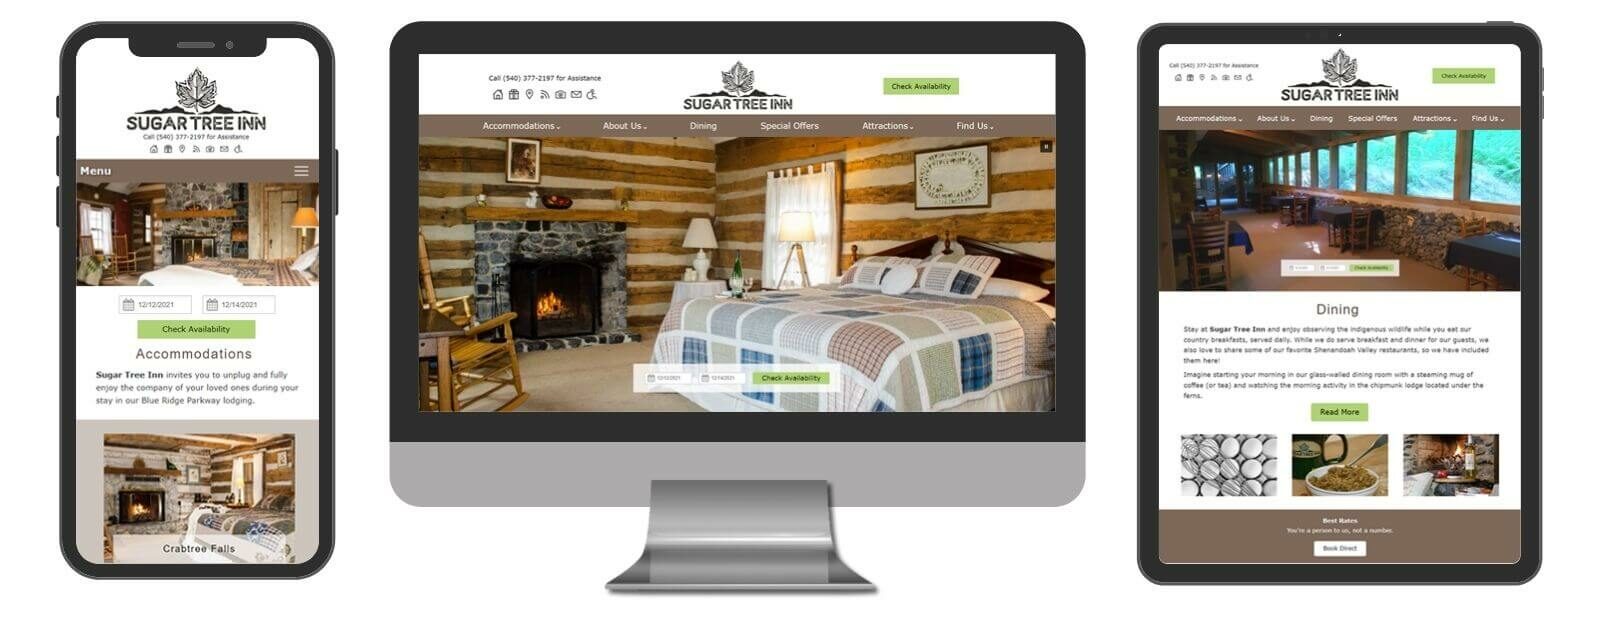 Sugar Tree Inn website displayed in 3 sizes - mobile, template and desktop